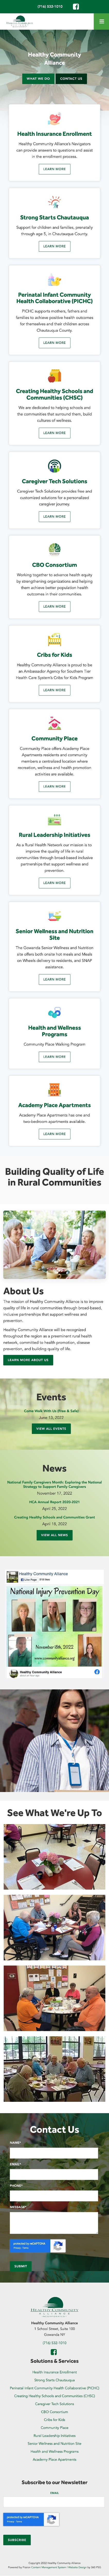 Healthy Community Alliance Website - Mobile